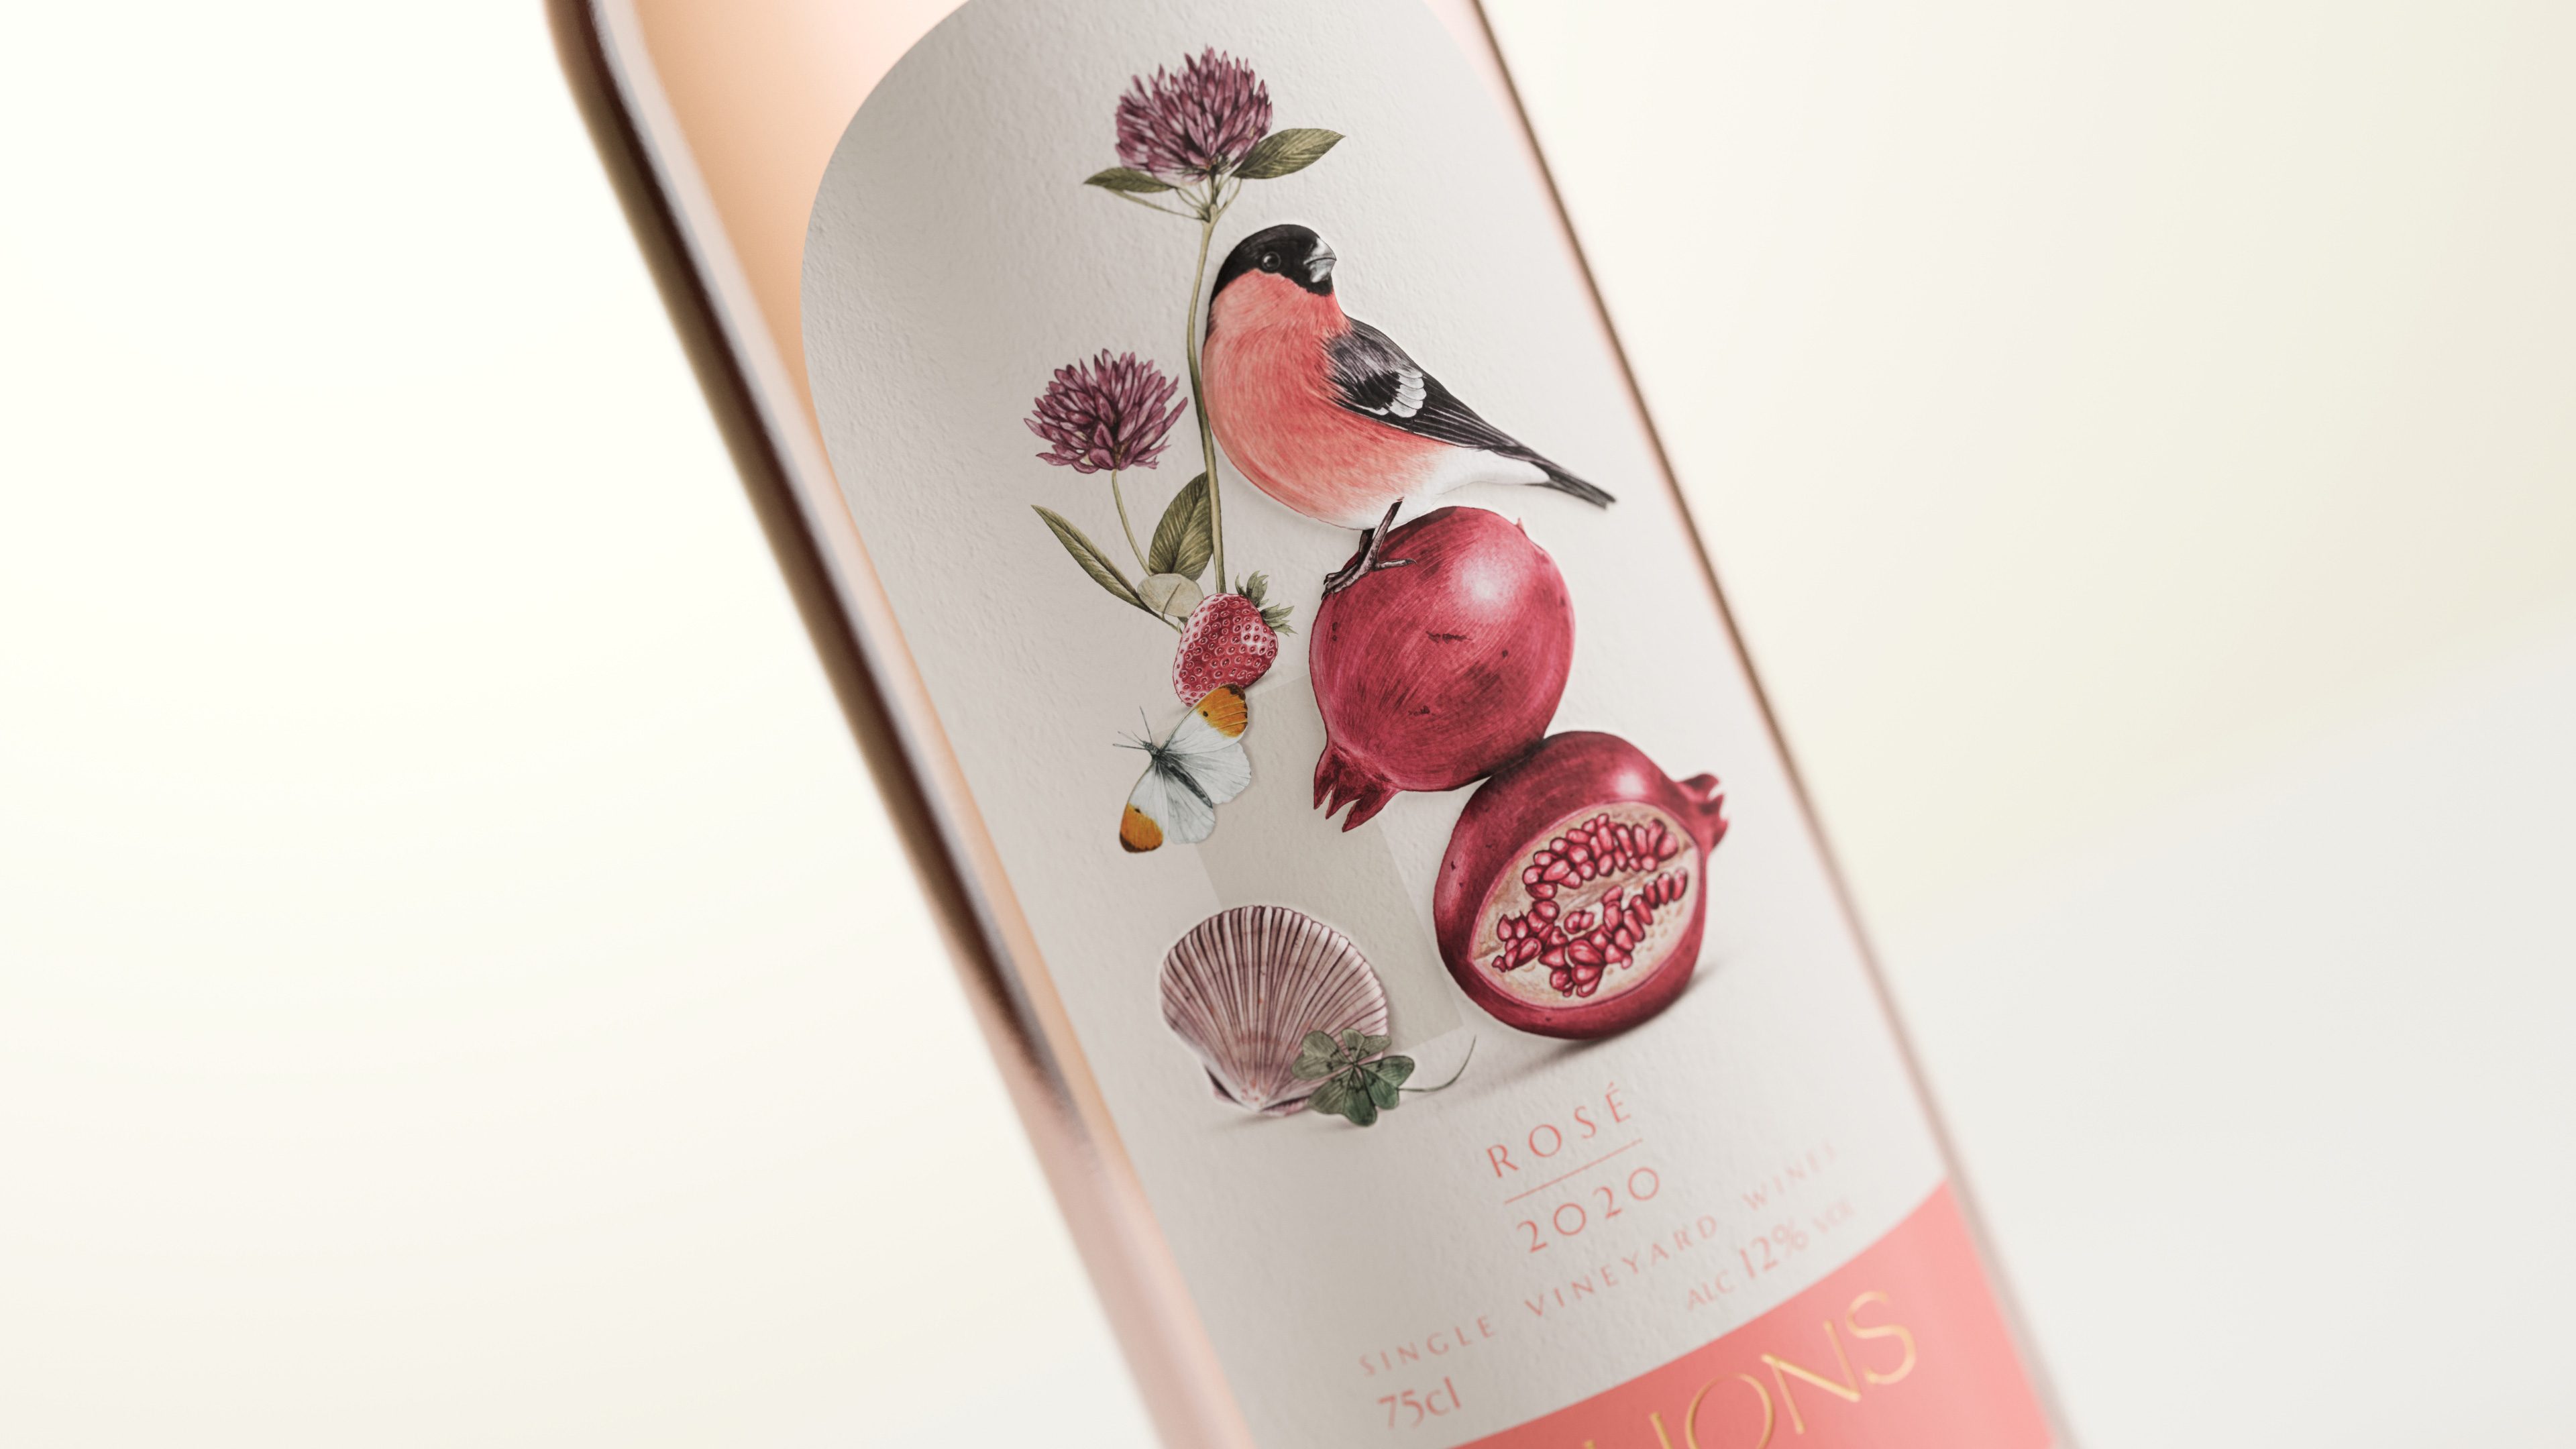 Dillions rose wine branding wine label design